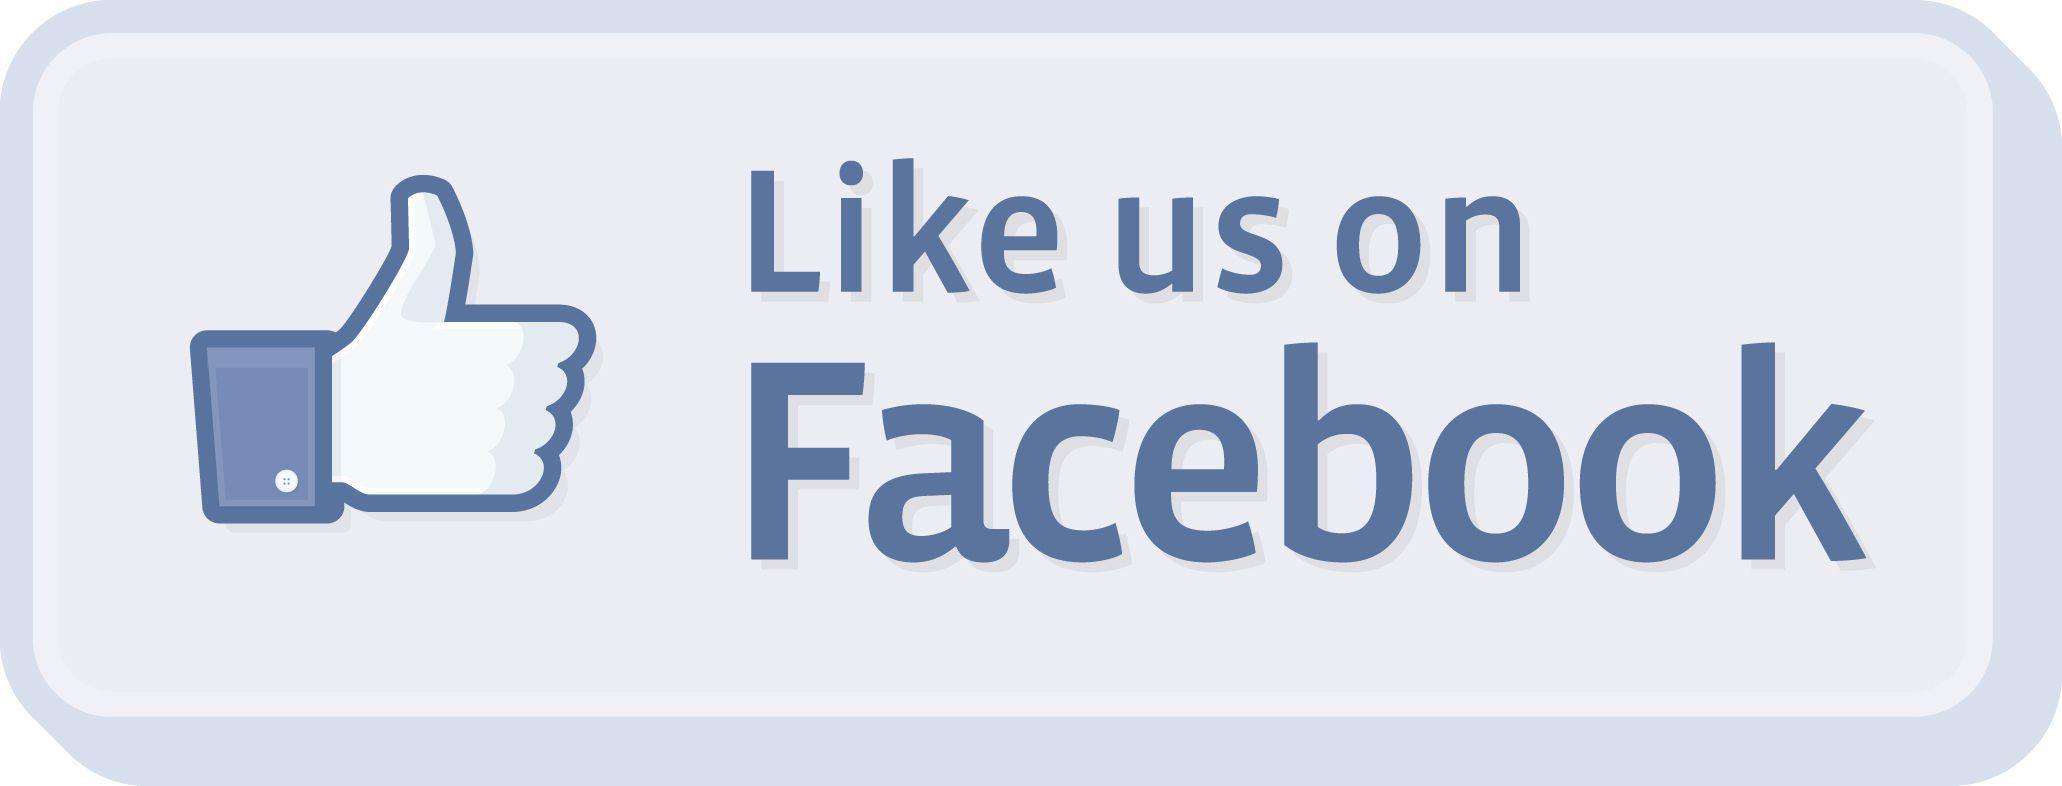 Facebook Like Logo - like-us-on-facebook-logo